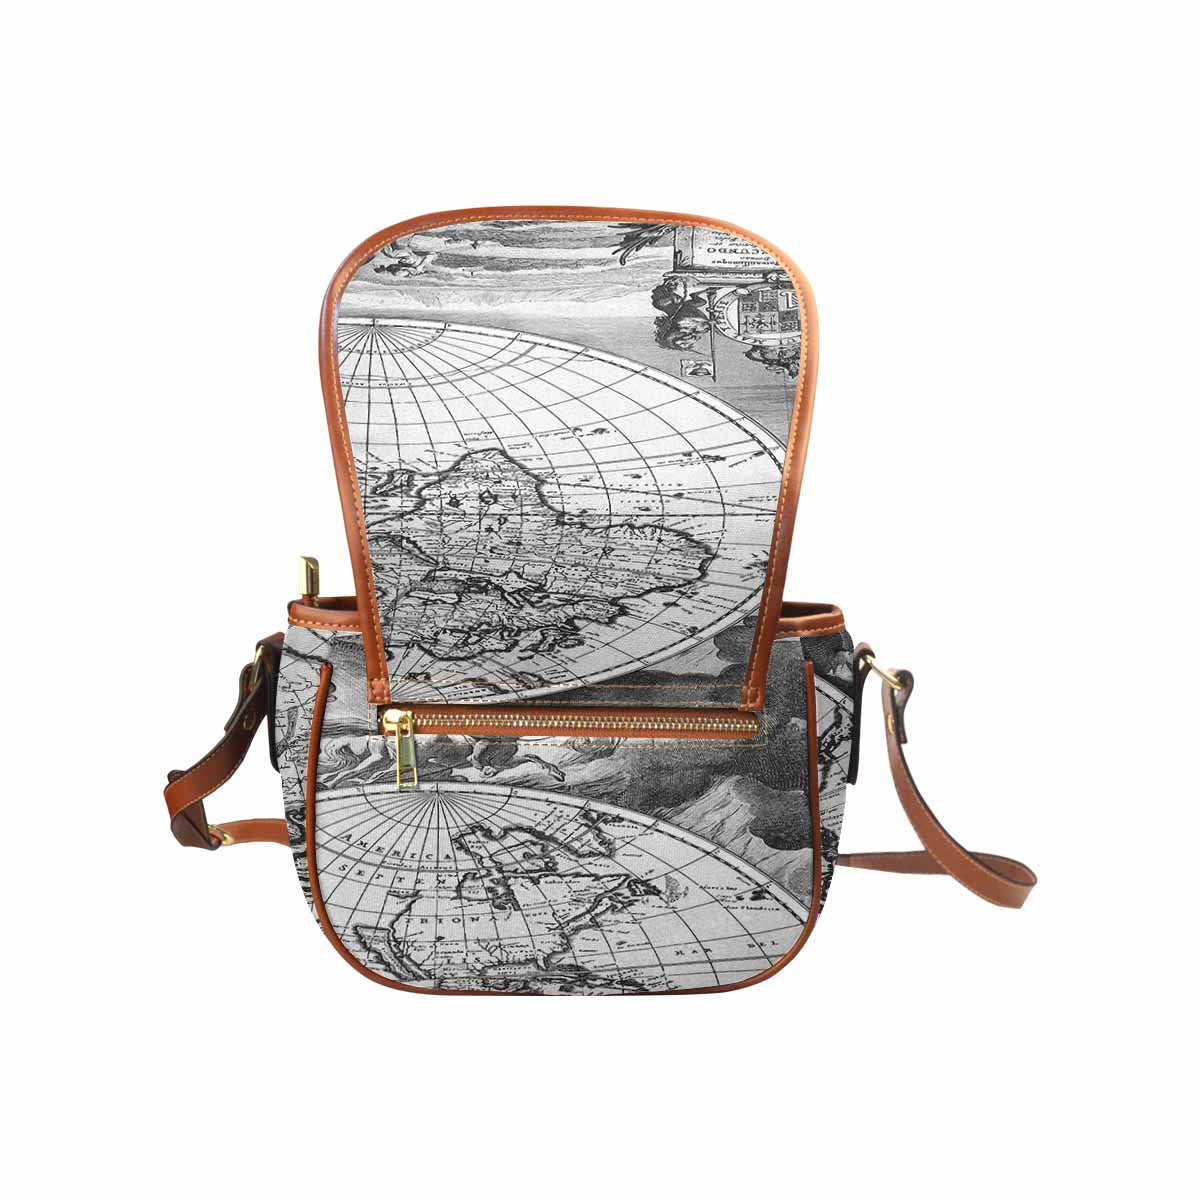 Antique Map design Handbag, saddle bag, Design 17